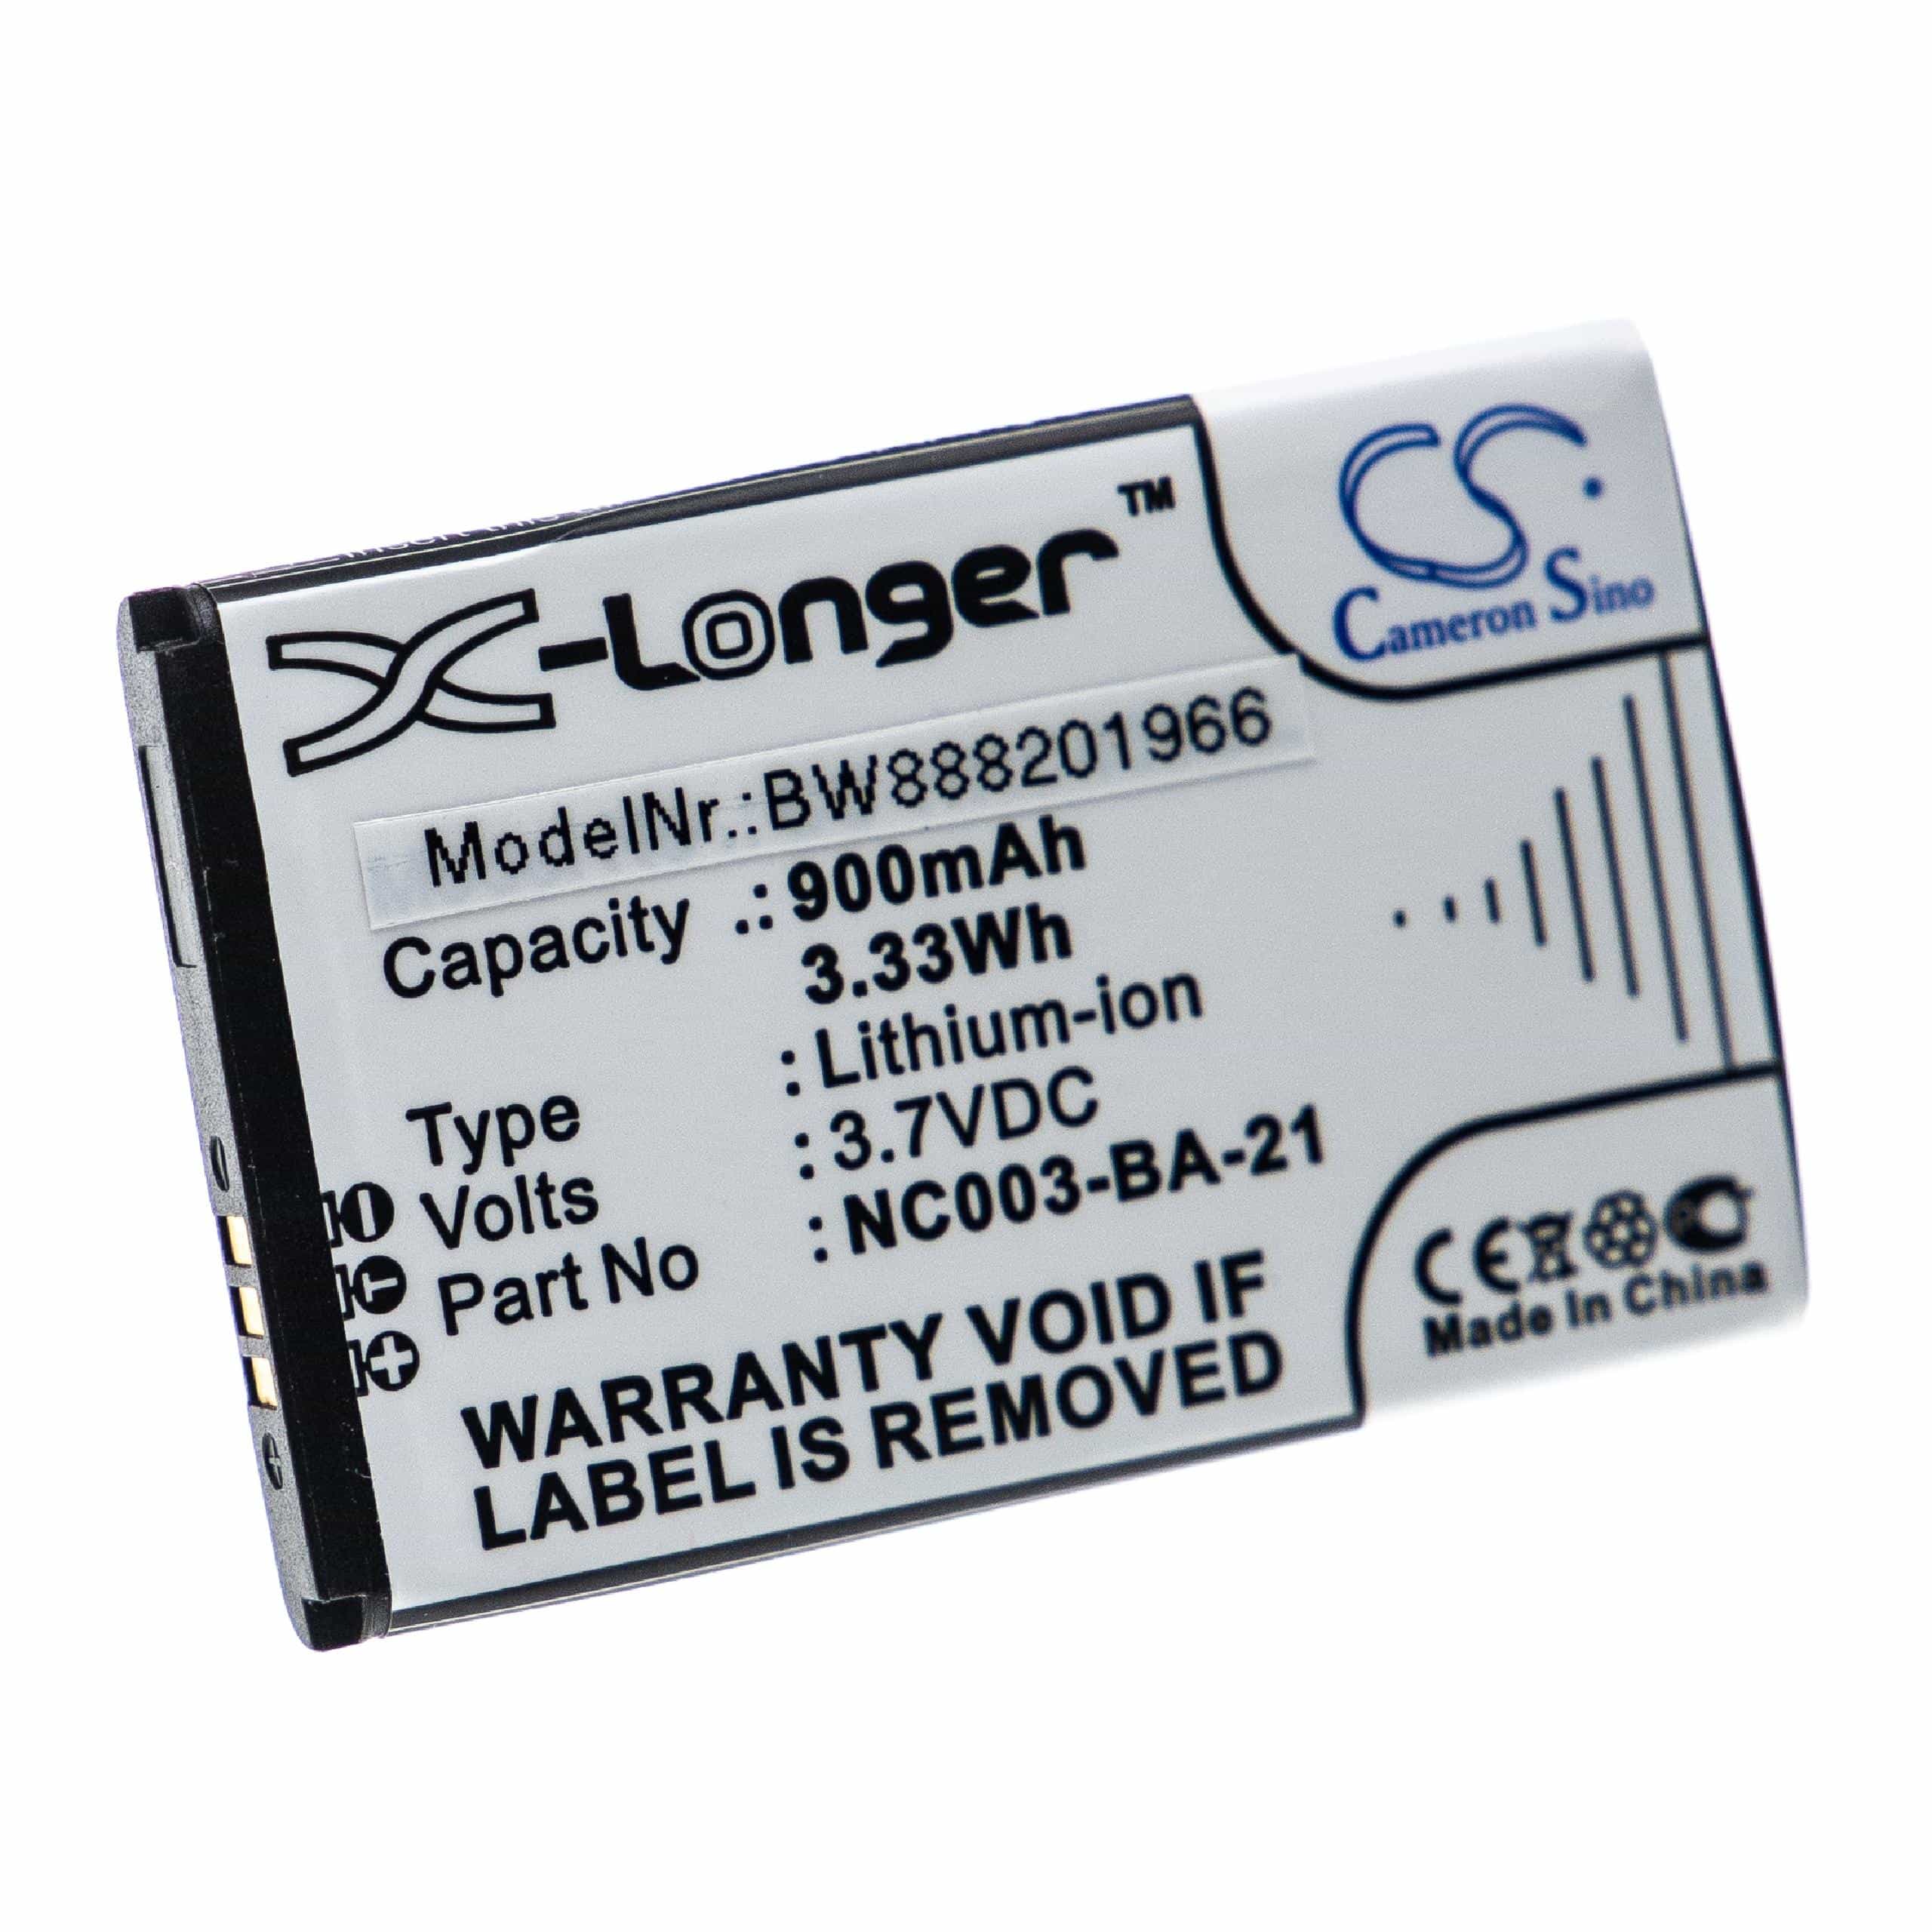 Wireless Headset Battery Replacement for Sennheiser NC003-BA-21 - 900mAh 3.7V Li-Ion